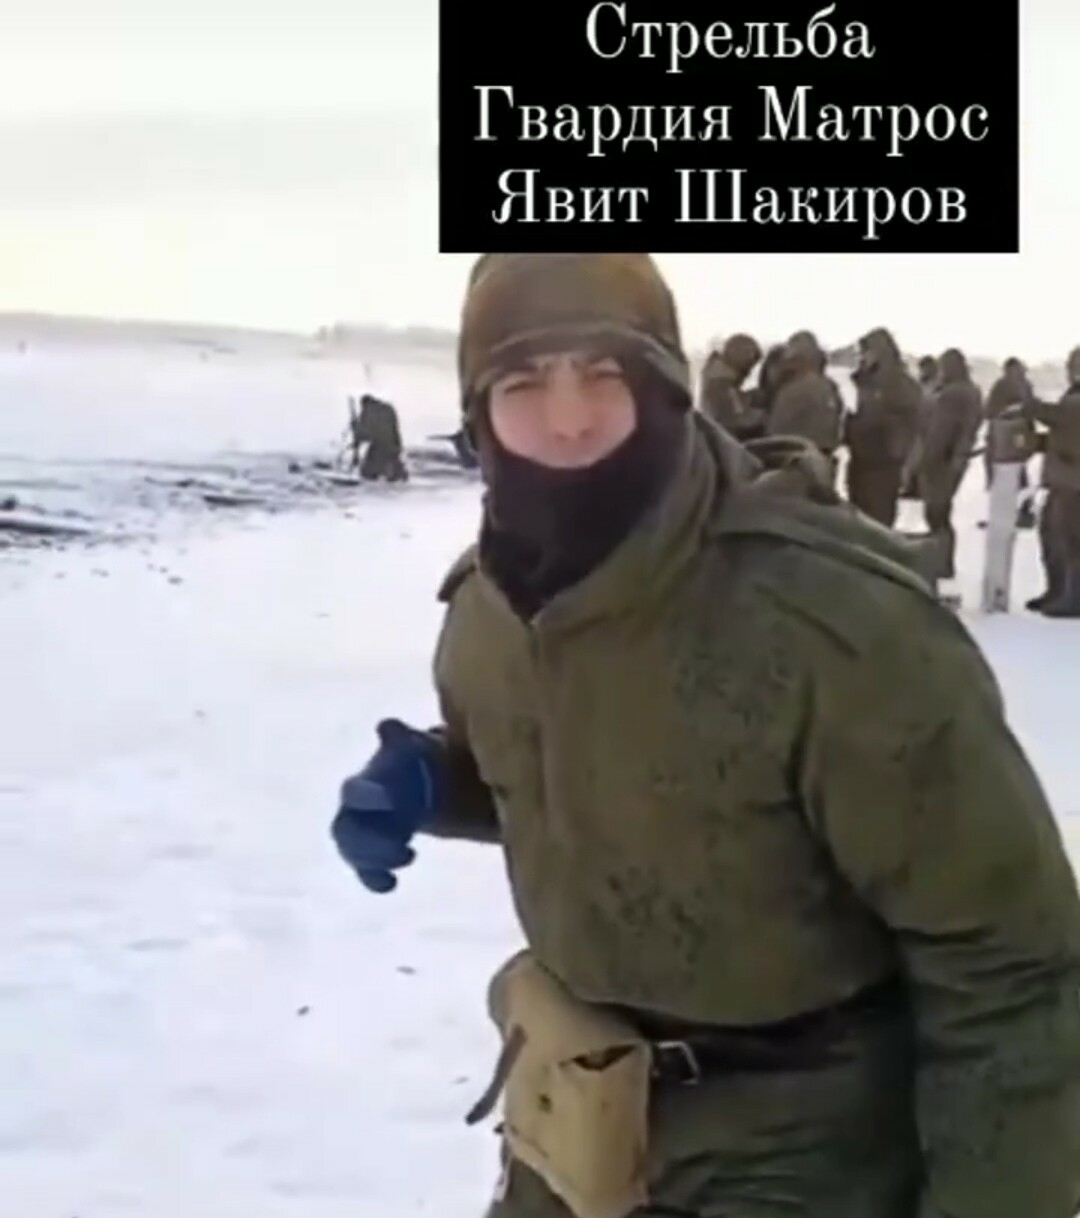 «Җәвит Шакиров мобилизациягә эләккән» – хәрби хезмәттәге татар егетеннән артистка пародия